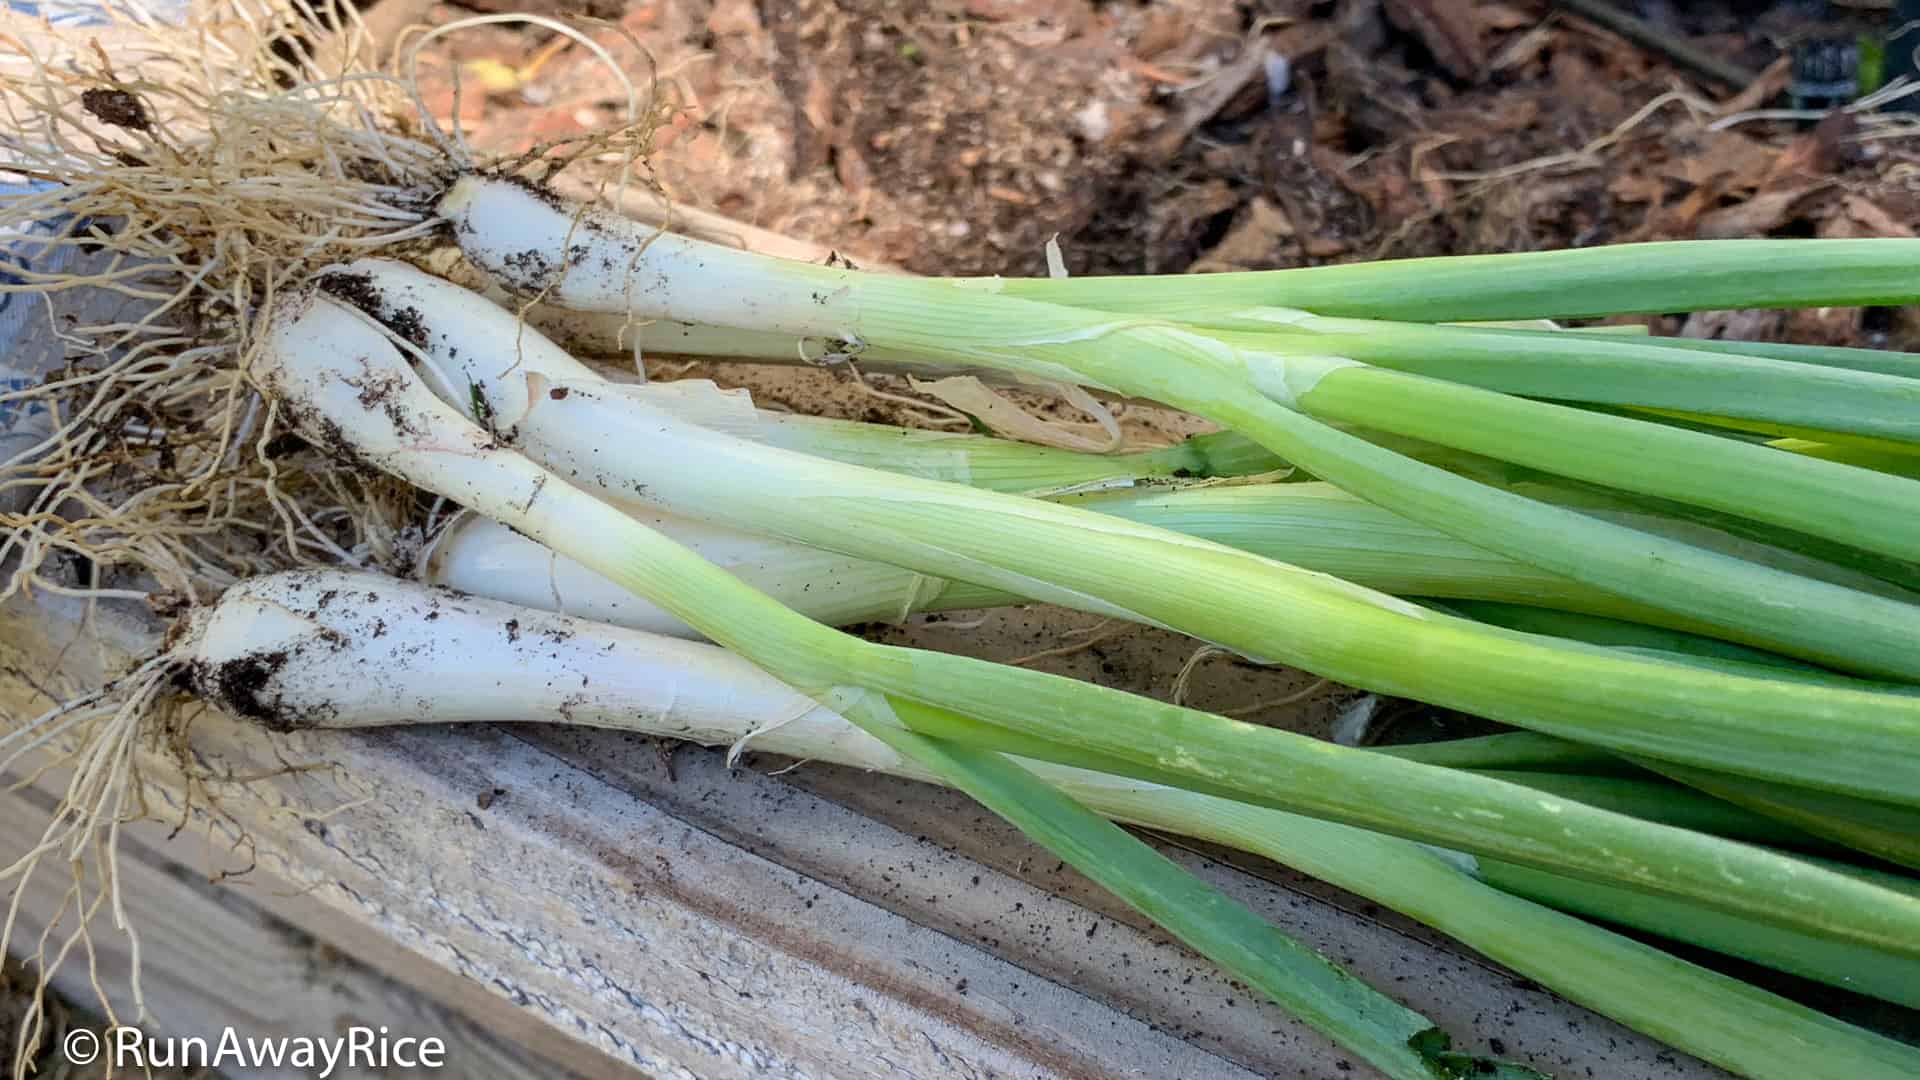 http://runawayrice.com/wp-content/uploads/2018/10/How-To-Freeze-Green-Onions-From-the-Garden.jpg